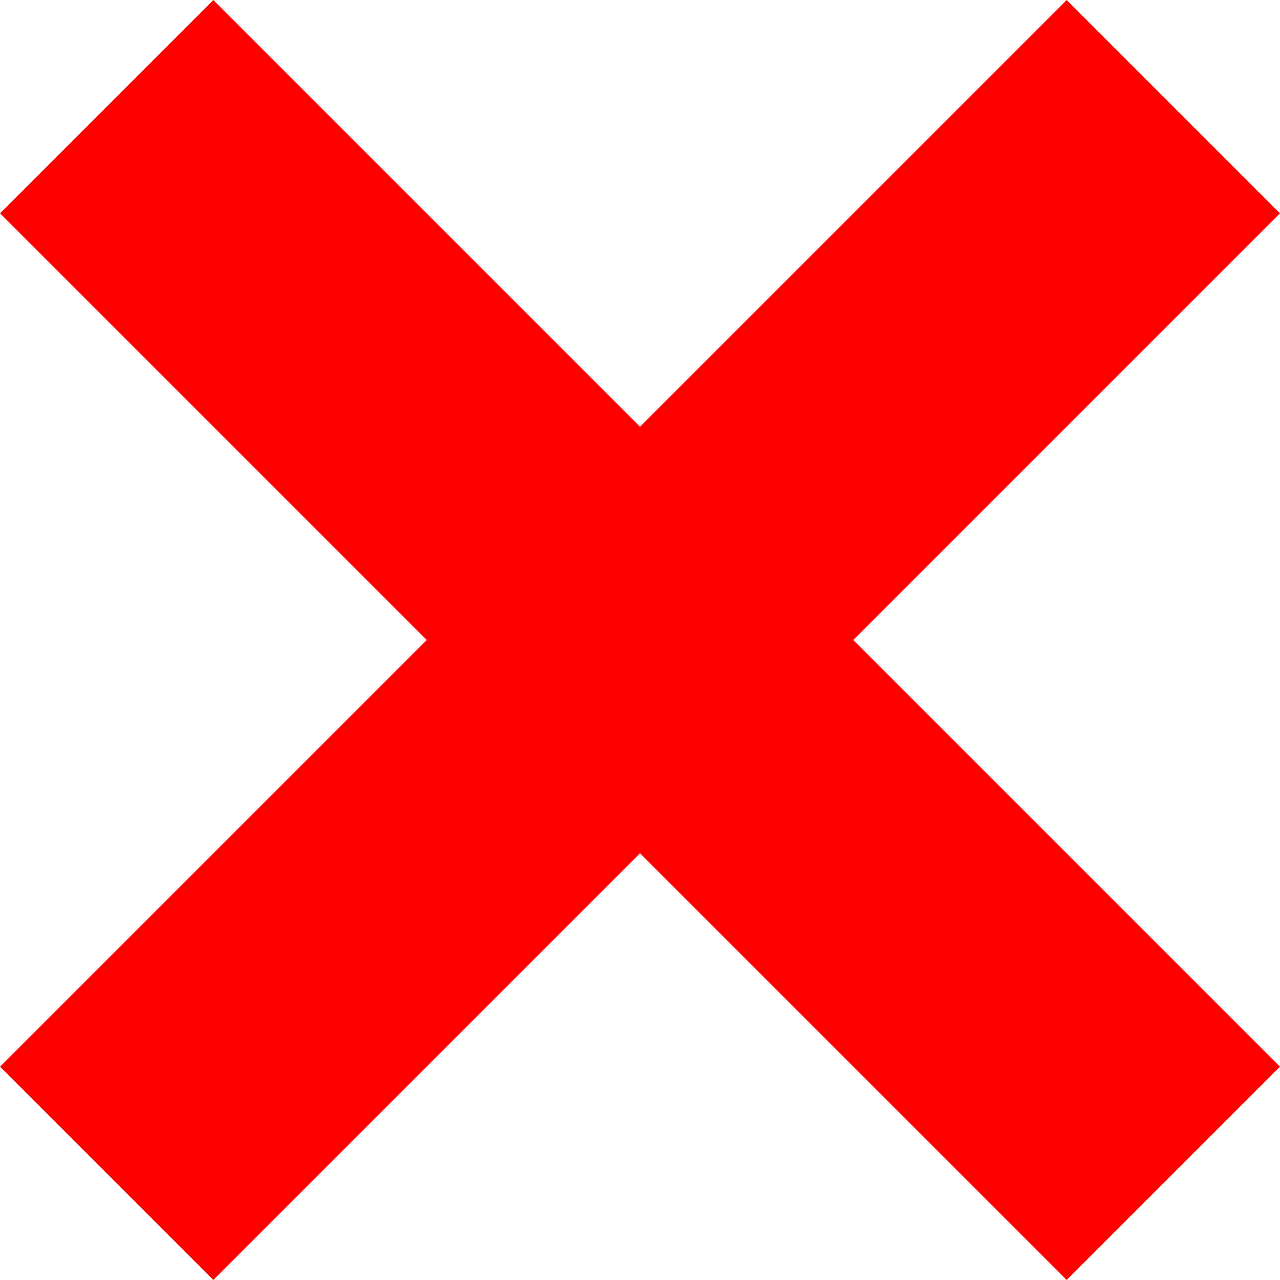 Check and cross mark symbol Royalty Free Vector Image